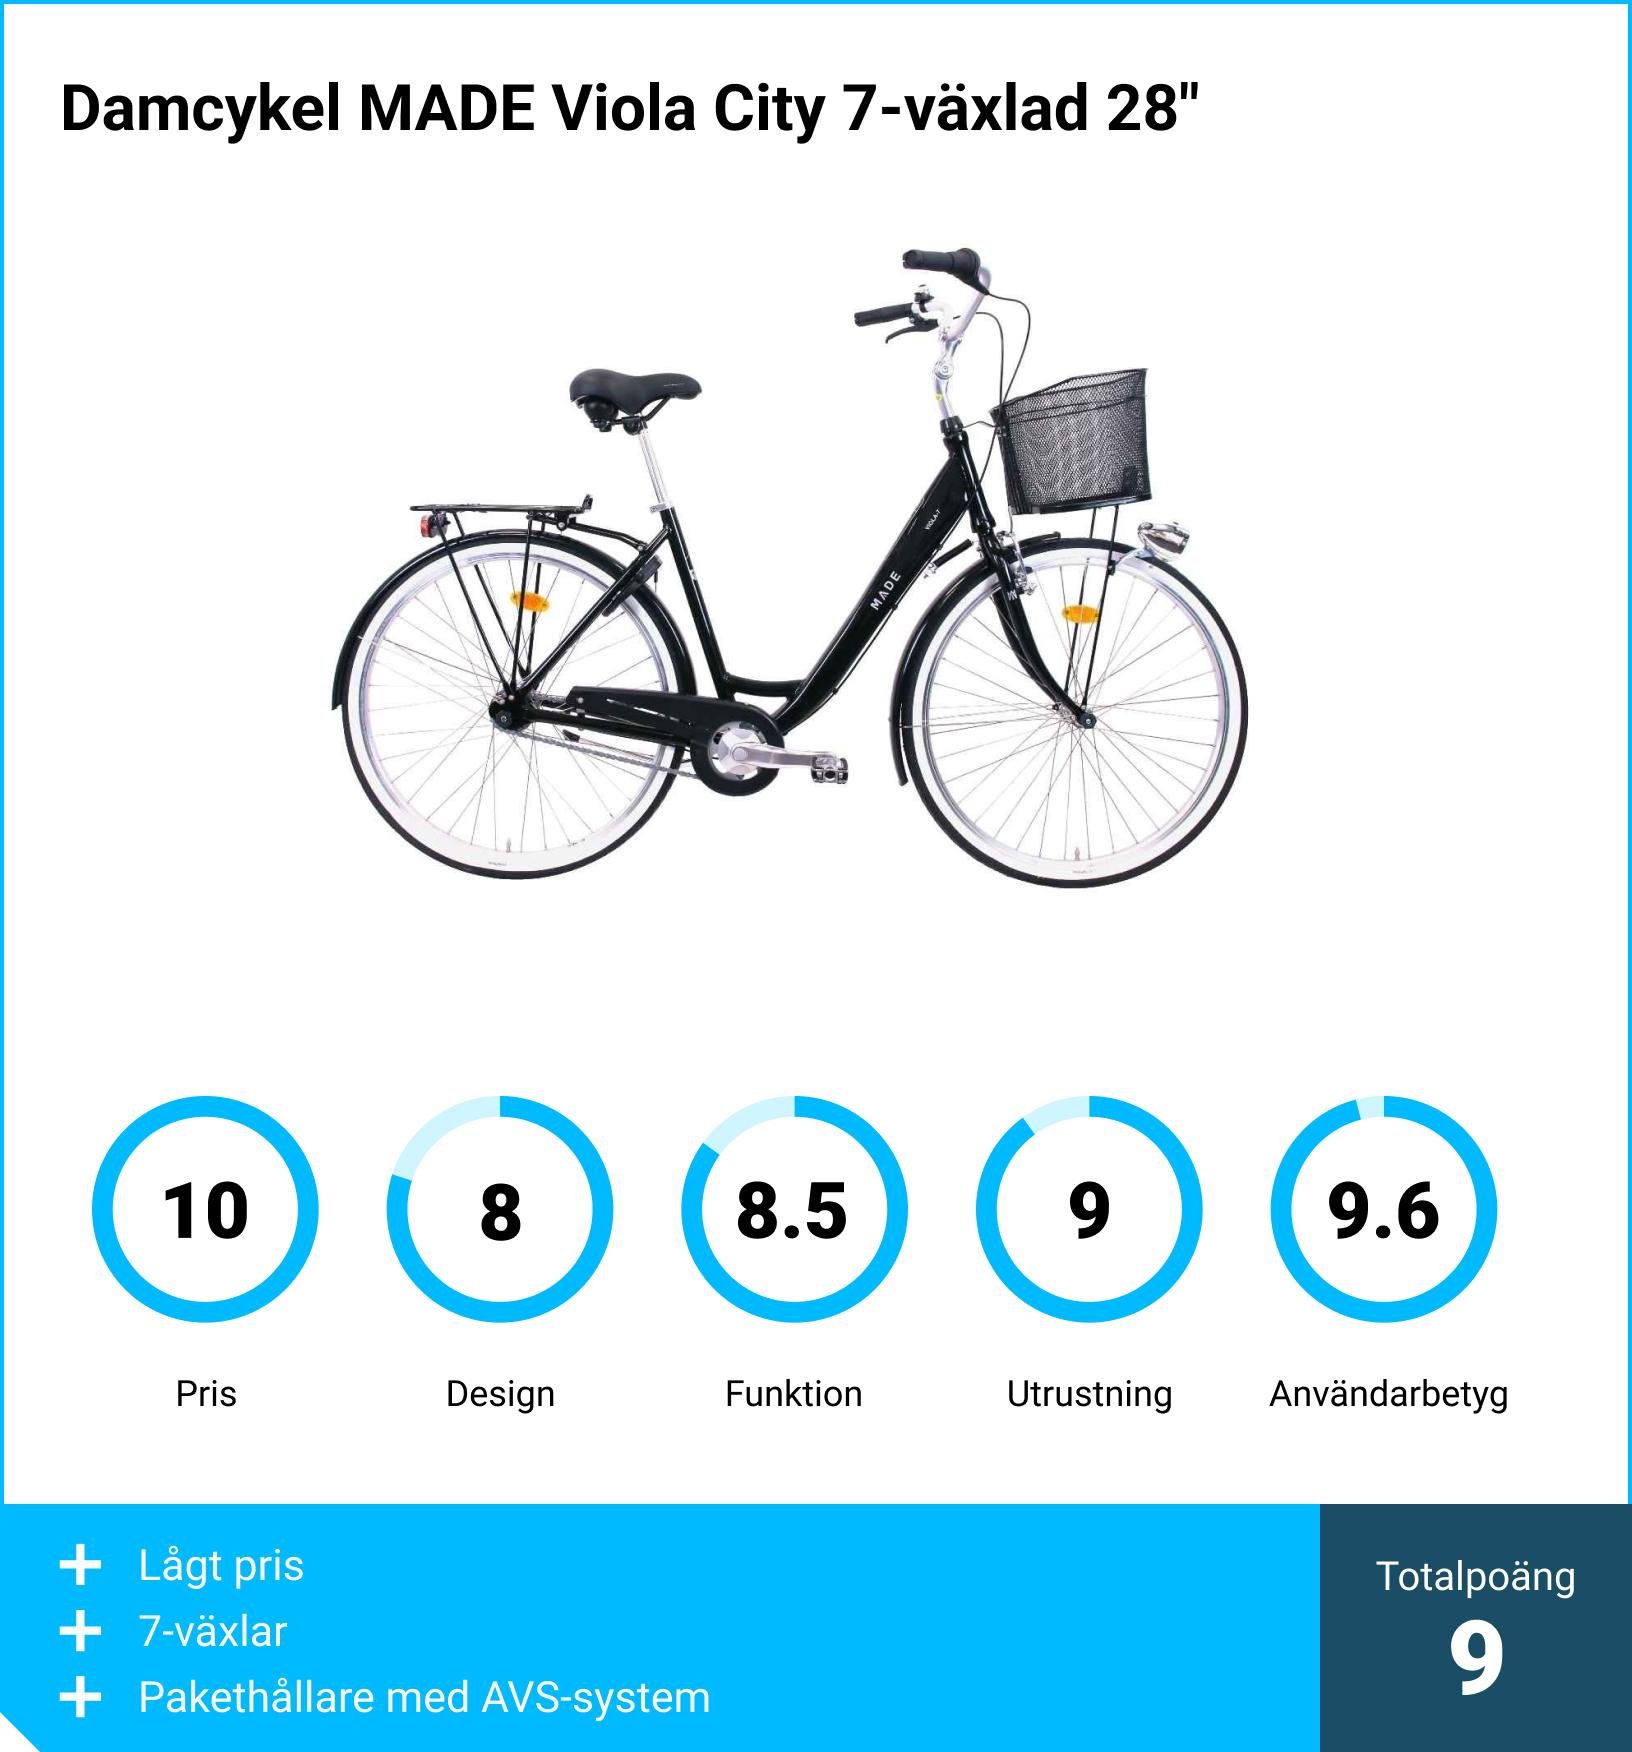 Damcykel bäst i test - Damcykel MADE Viola City 7-växlad 28"